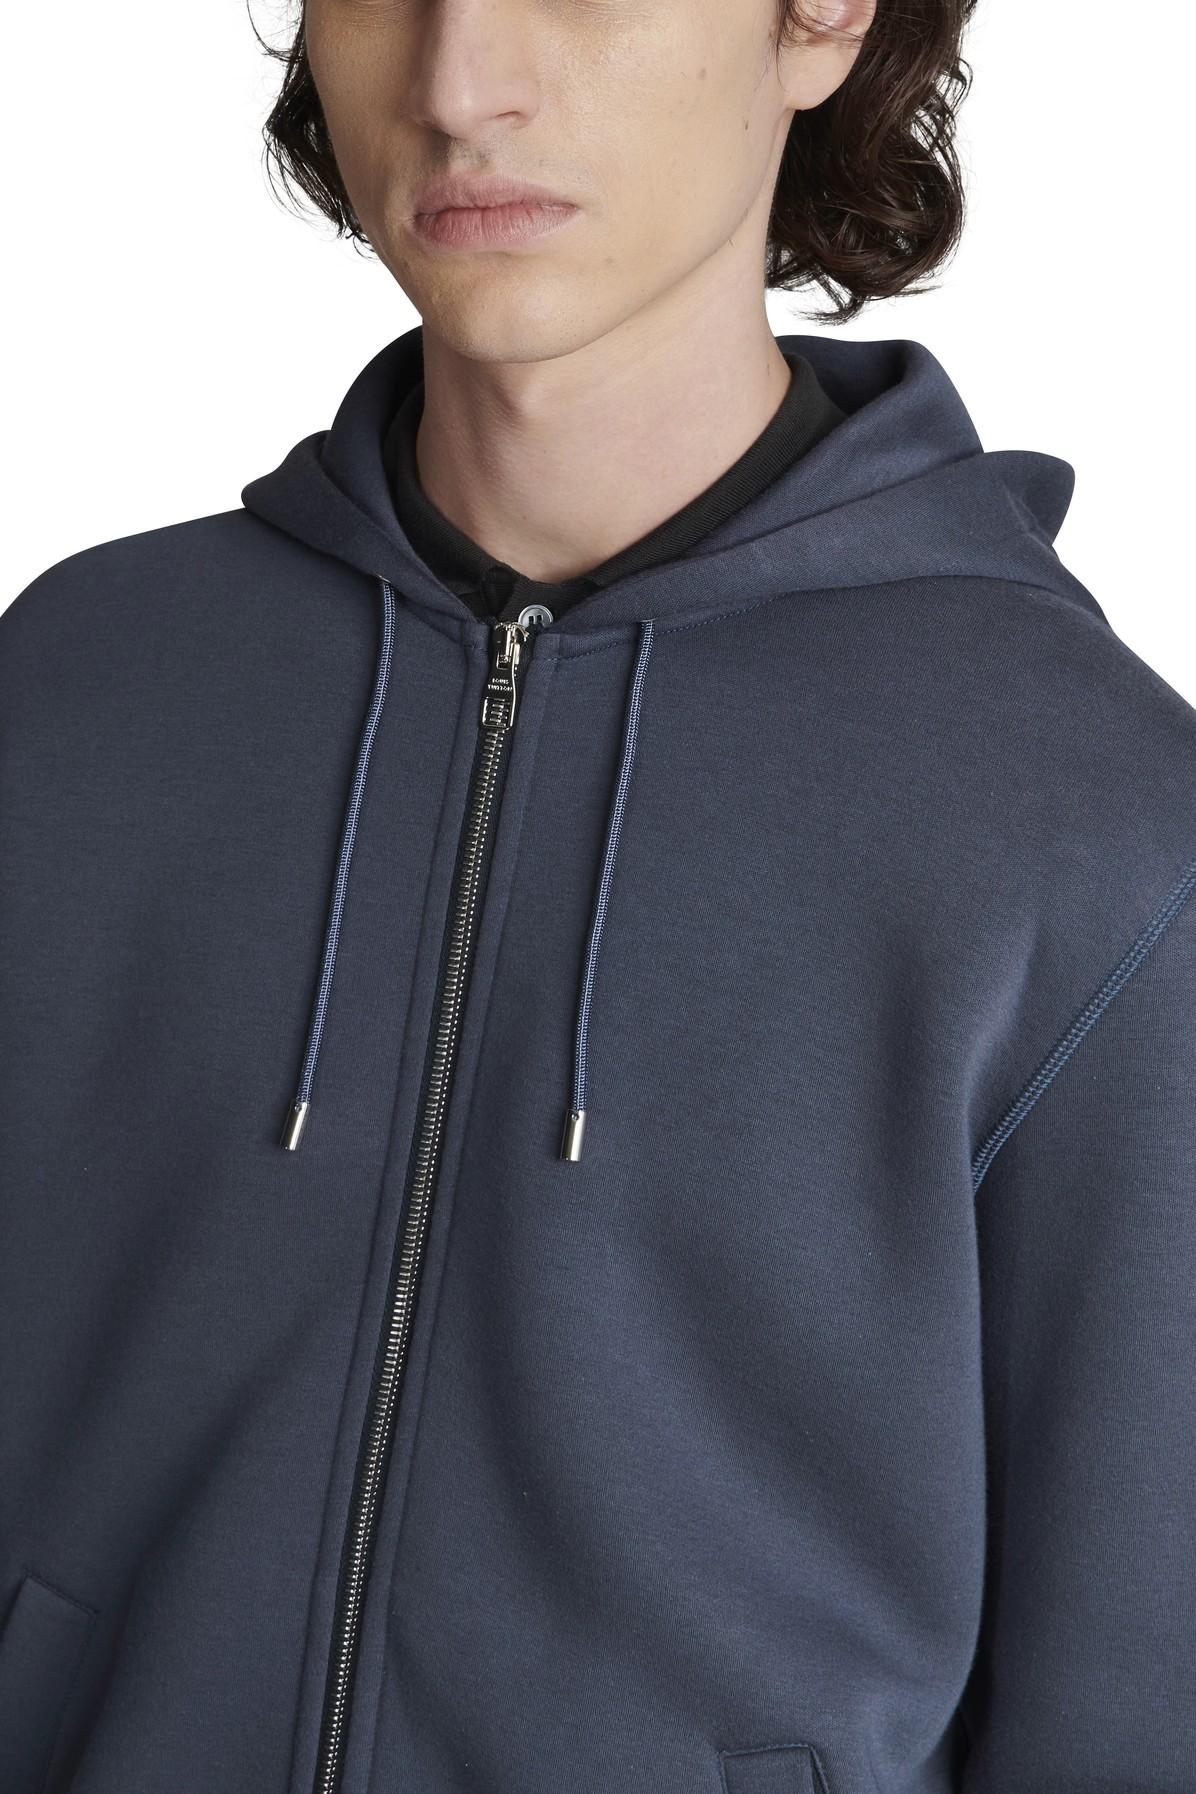 Louis Vuitton Sweatshirts & Hoodies for Men - Poshmark